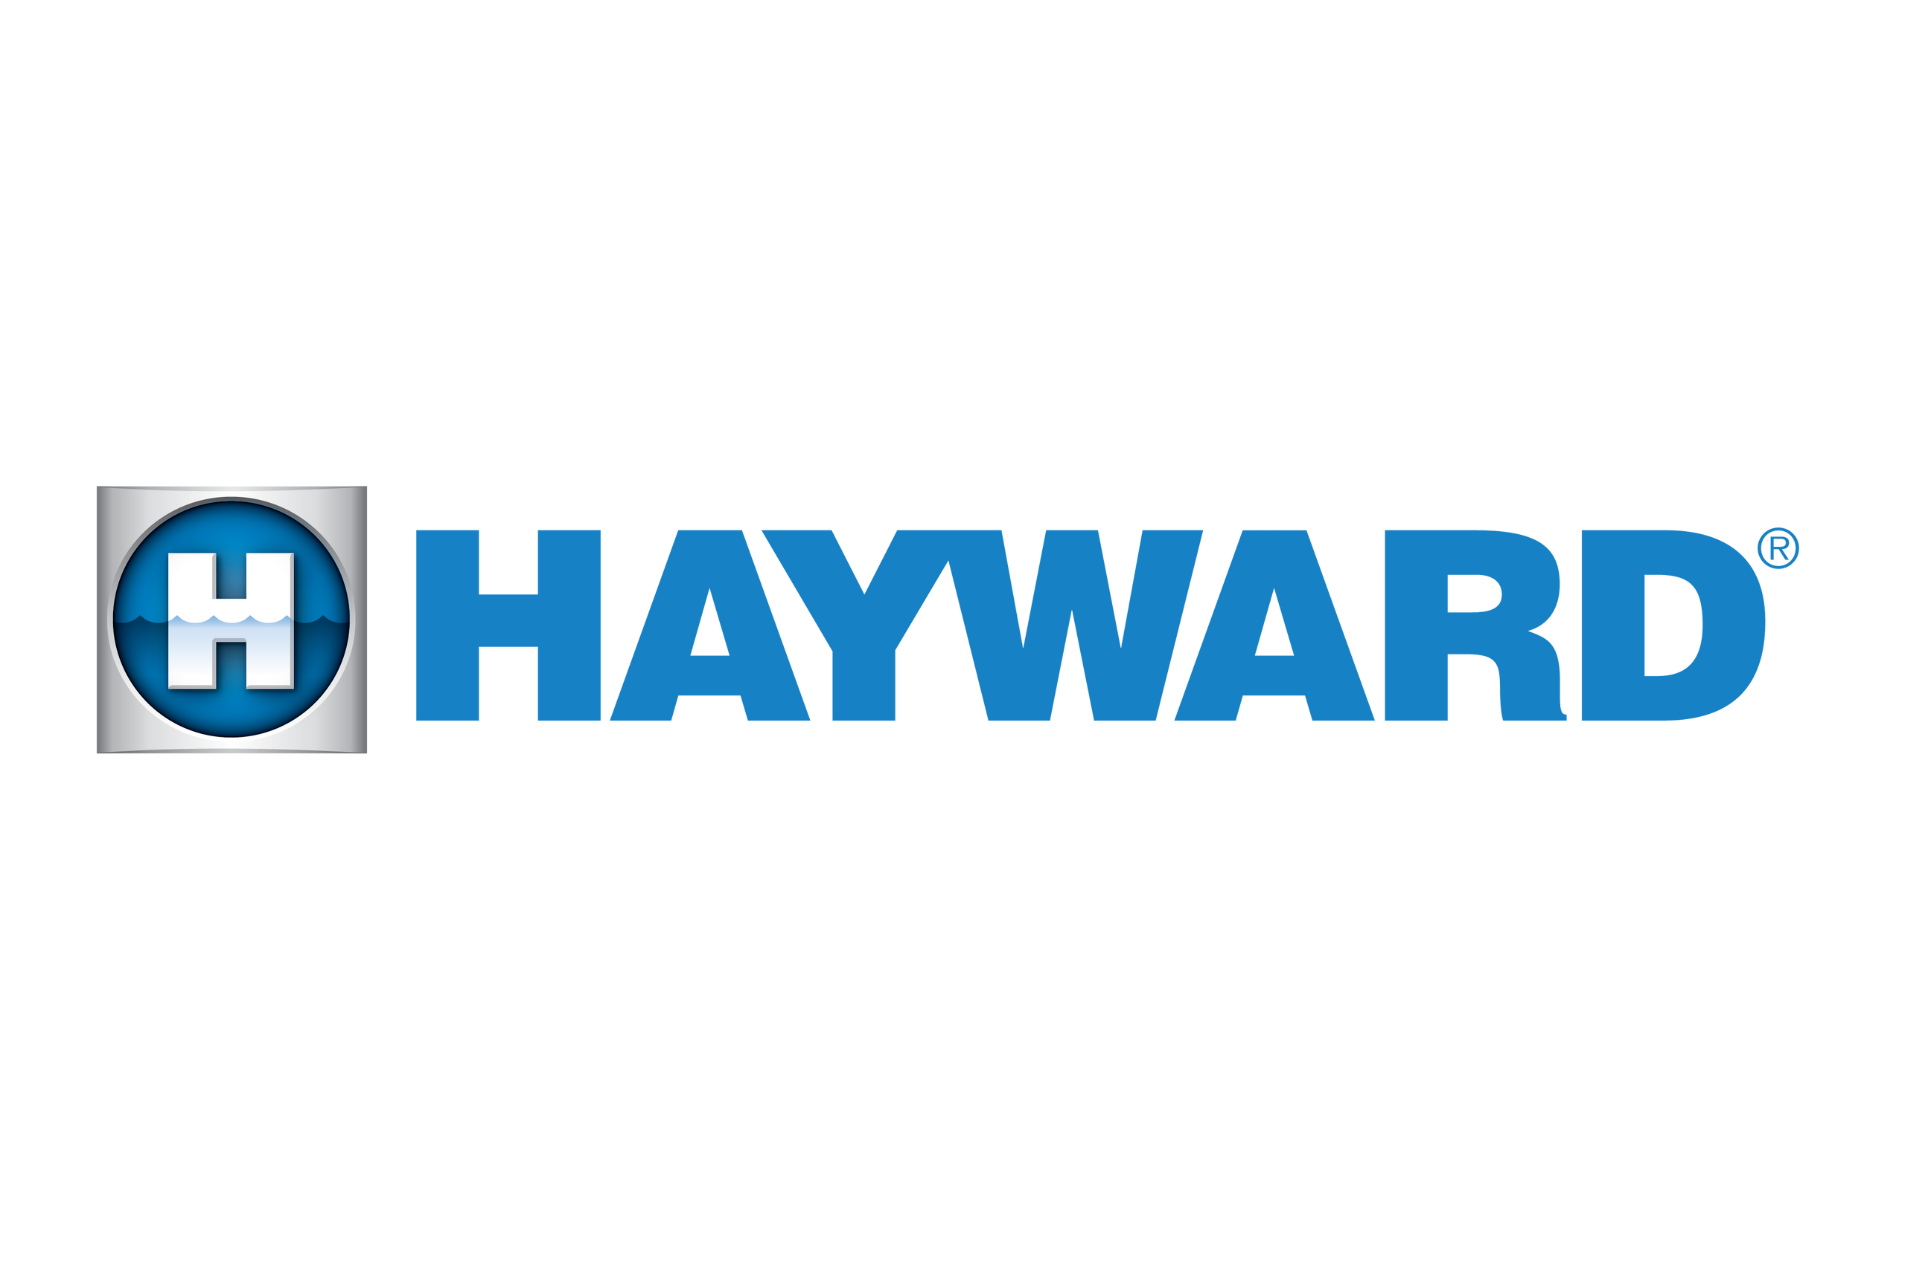 Hayward logo (2)